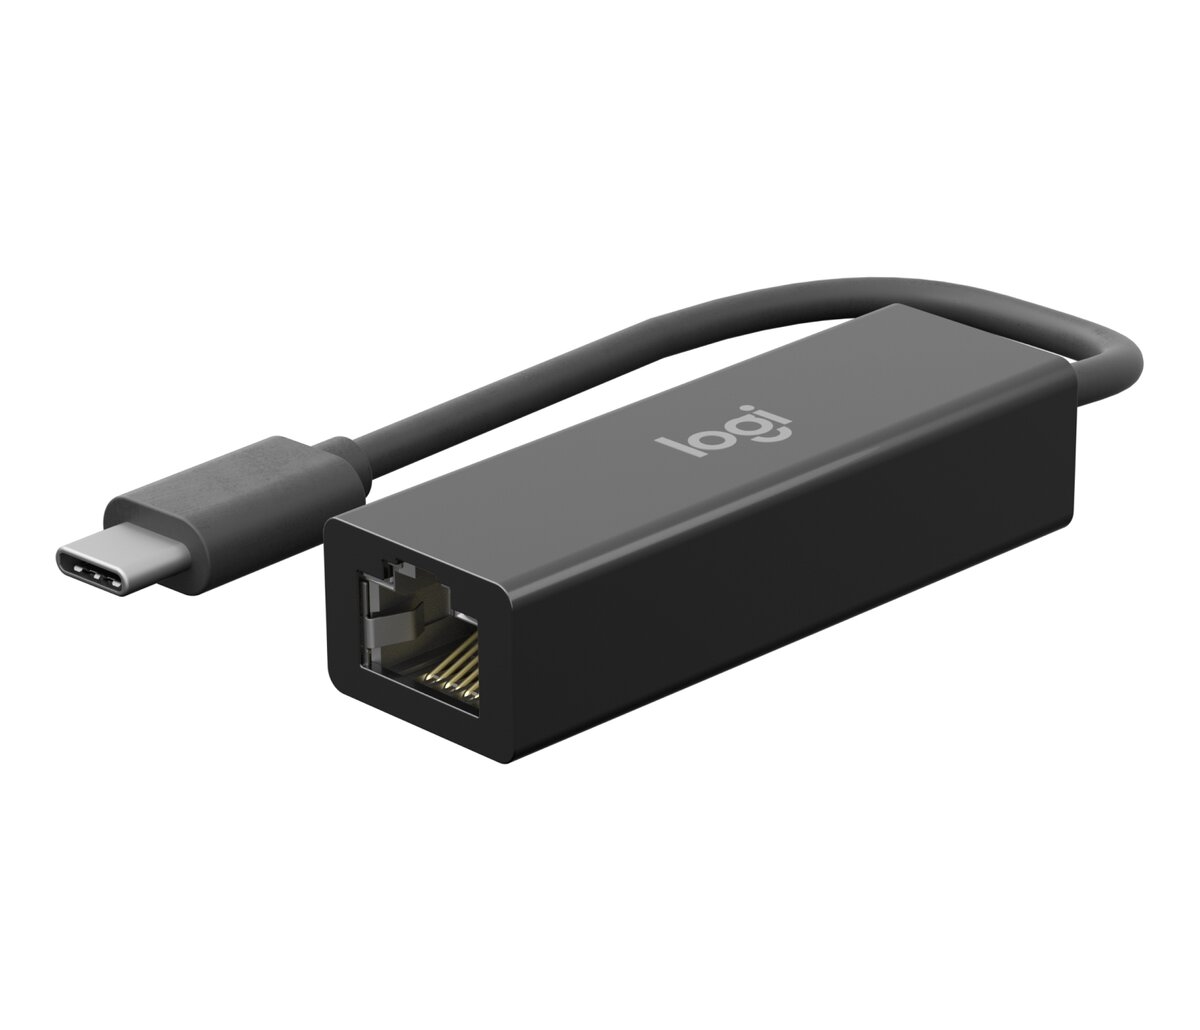 2.5GbE USB C to Ethernet Adapter NBASE-T NIC - USB 3.0 Type C 2.5/1  Gigabit/100 Mbps Multi Speed Network/ USB 3.1 Laptop to RJ45/LAN  Thunderbolt 3